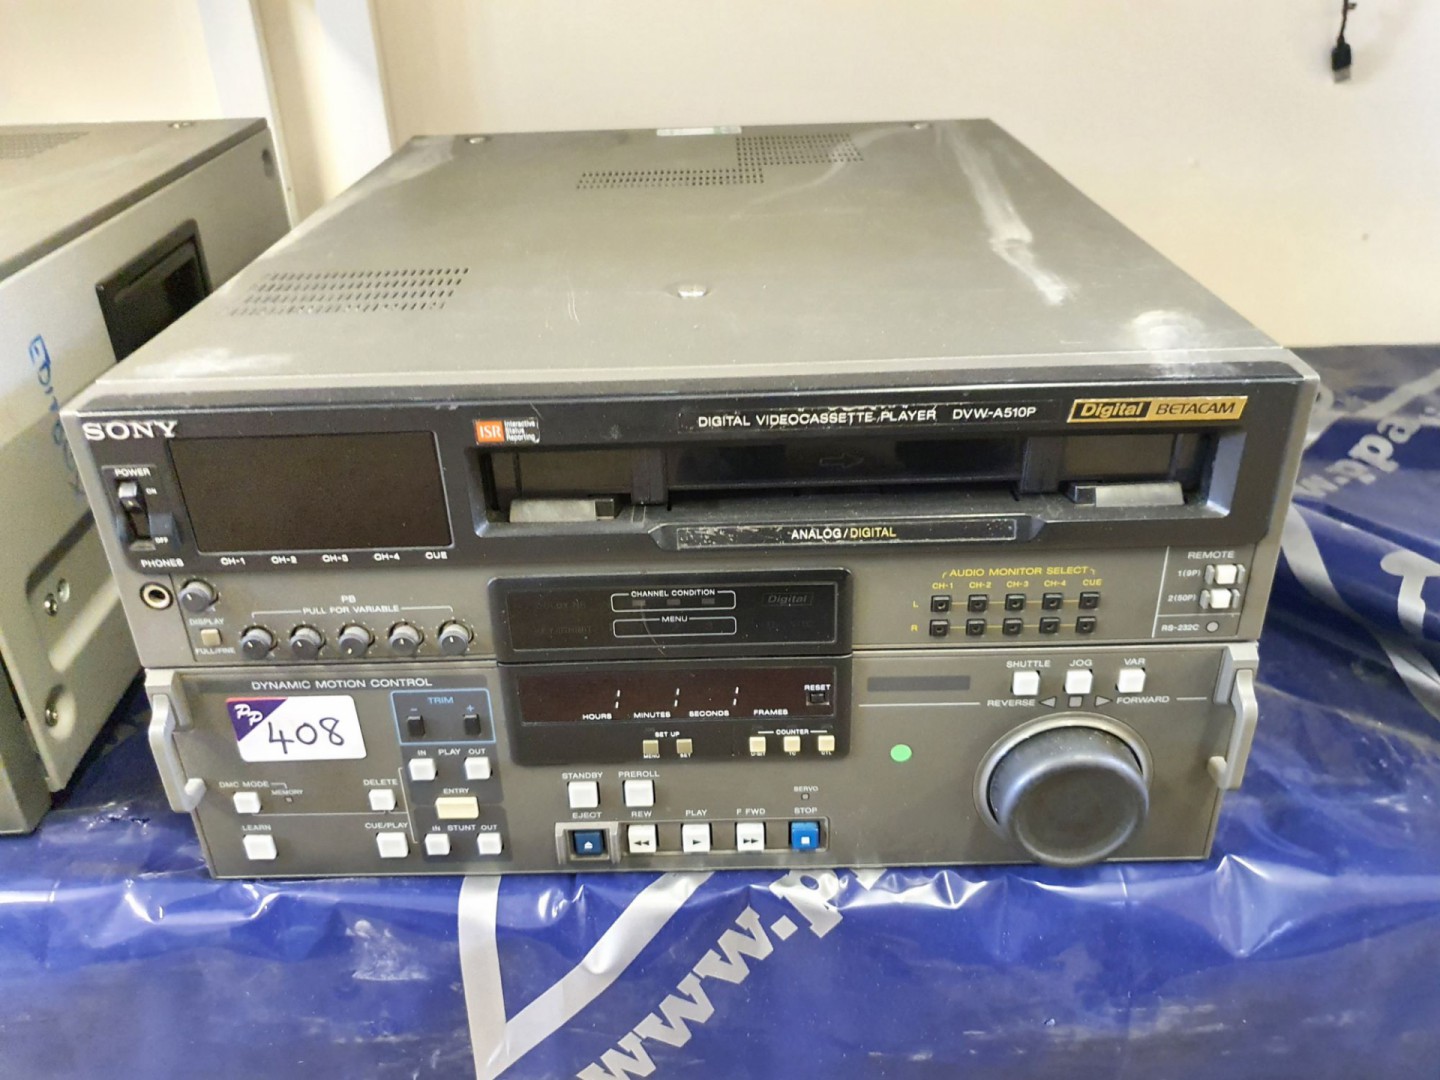 Sony DVW-A510P digital video cassette player